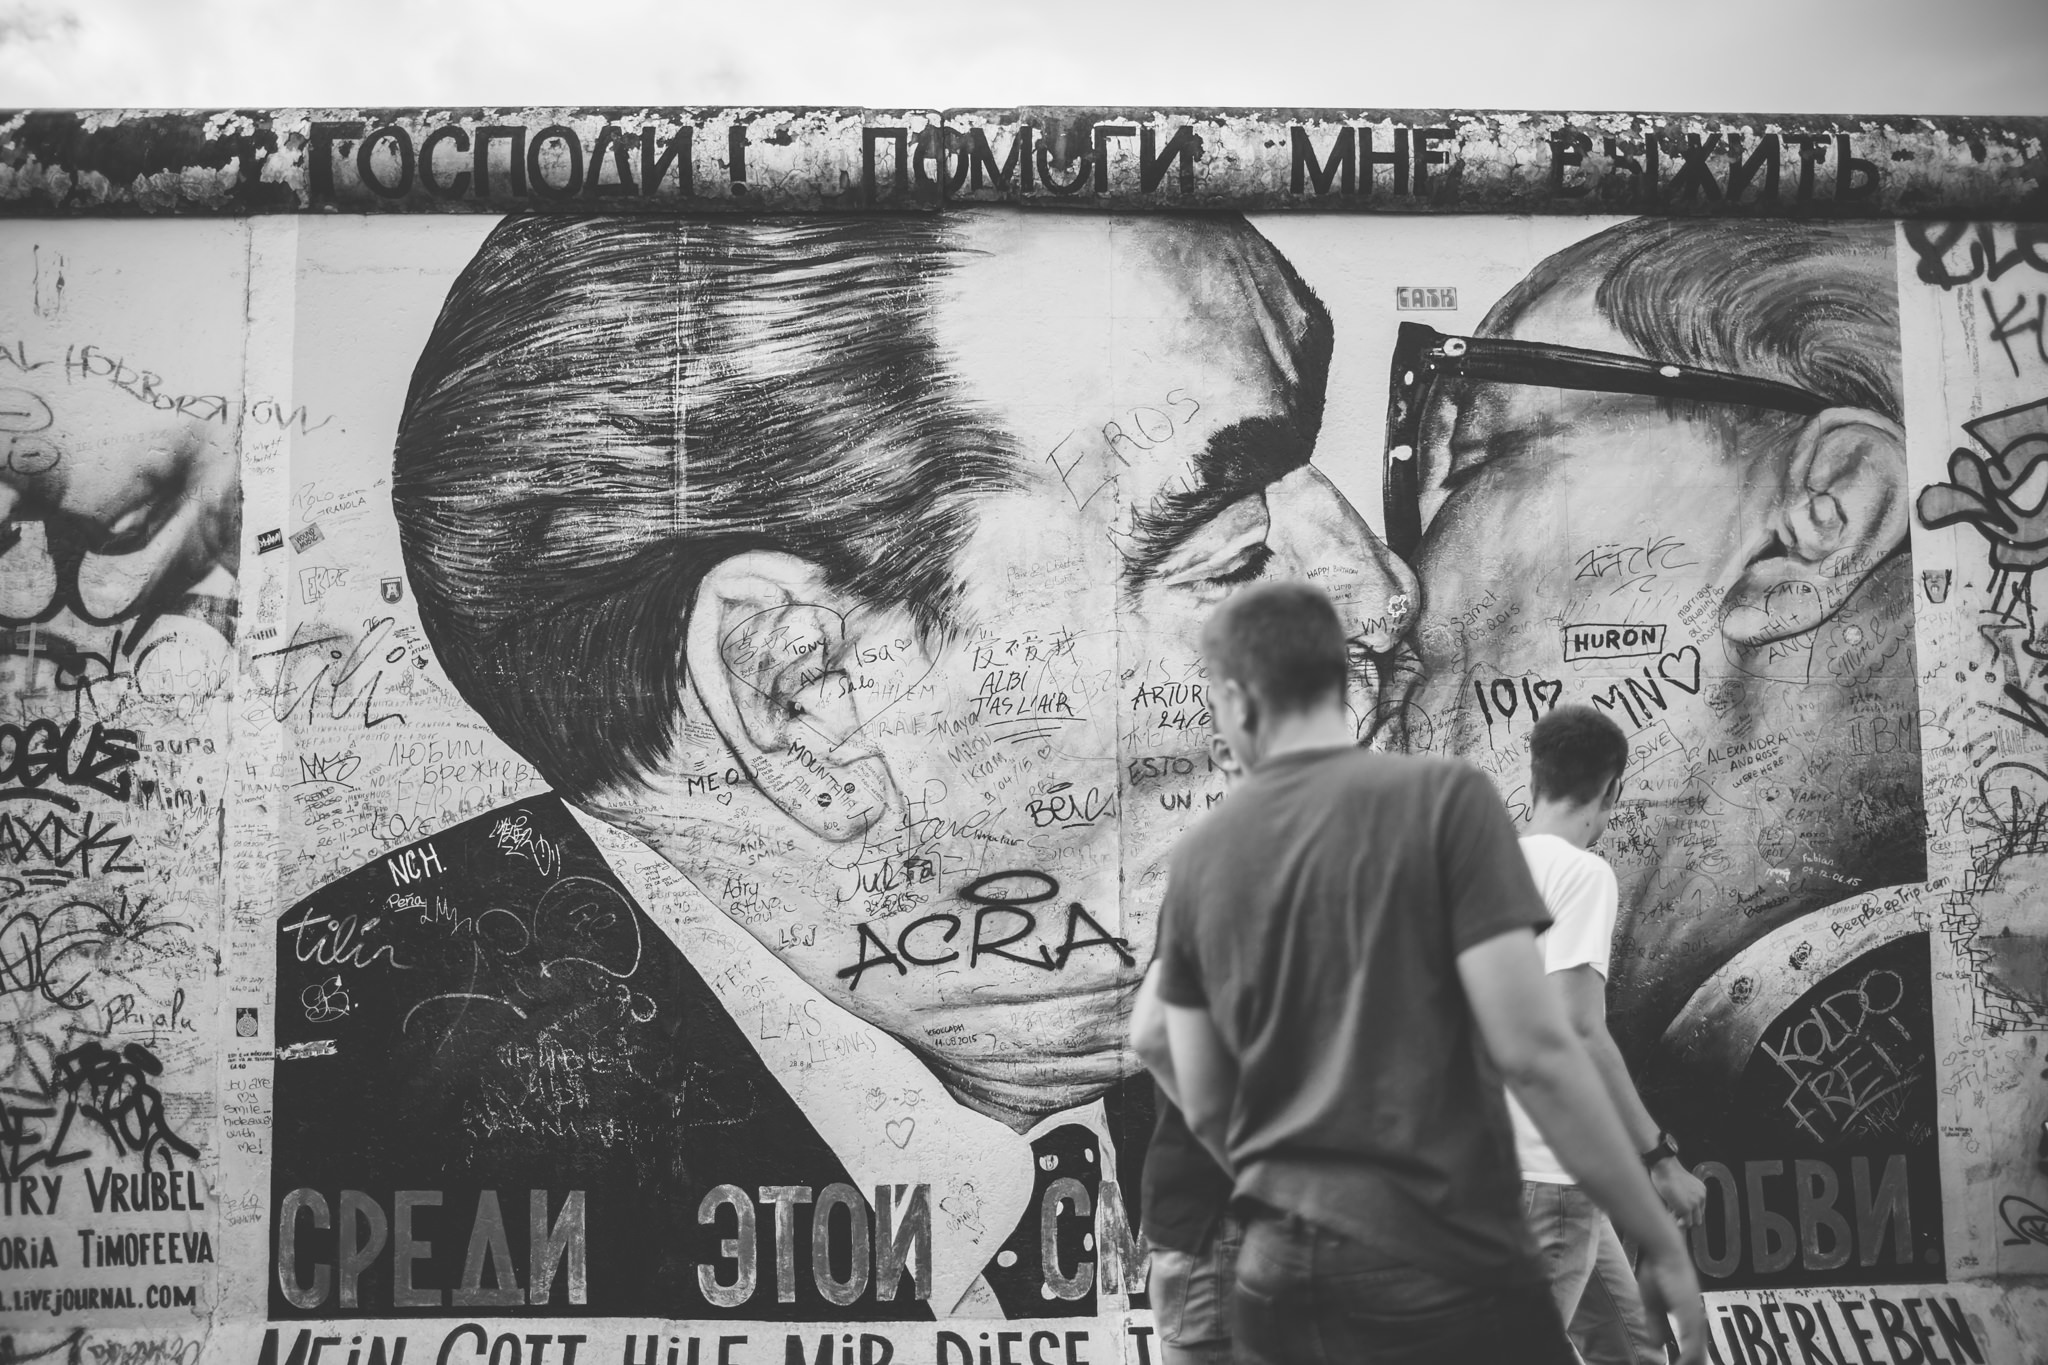 A group of men walks past graffiti on the Berlin Wall